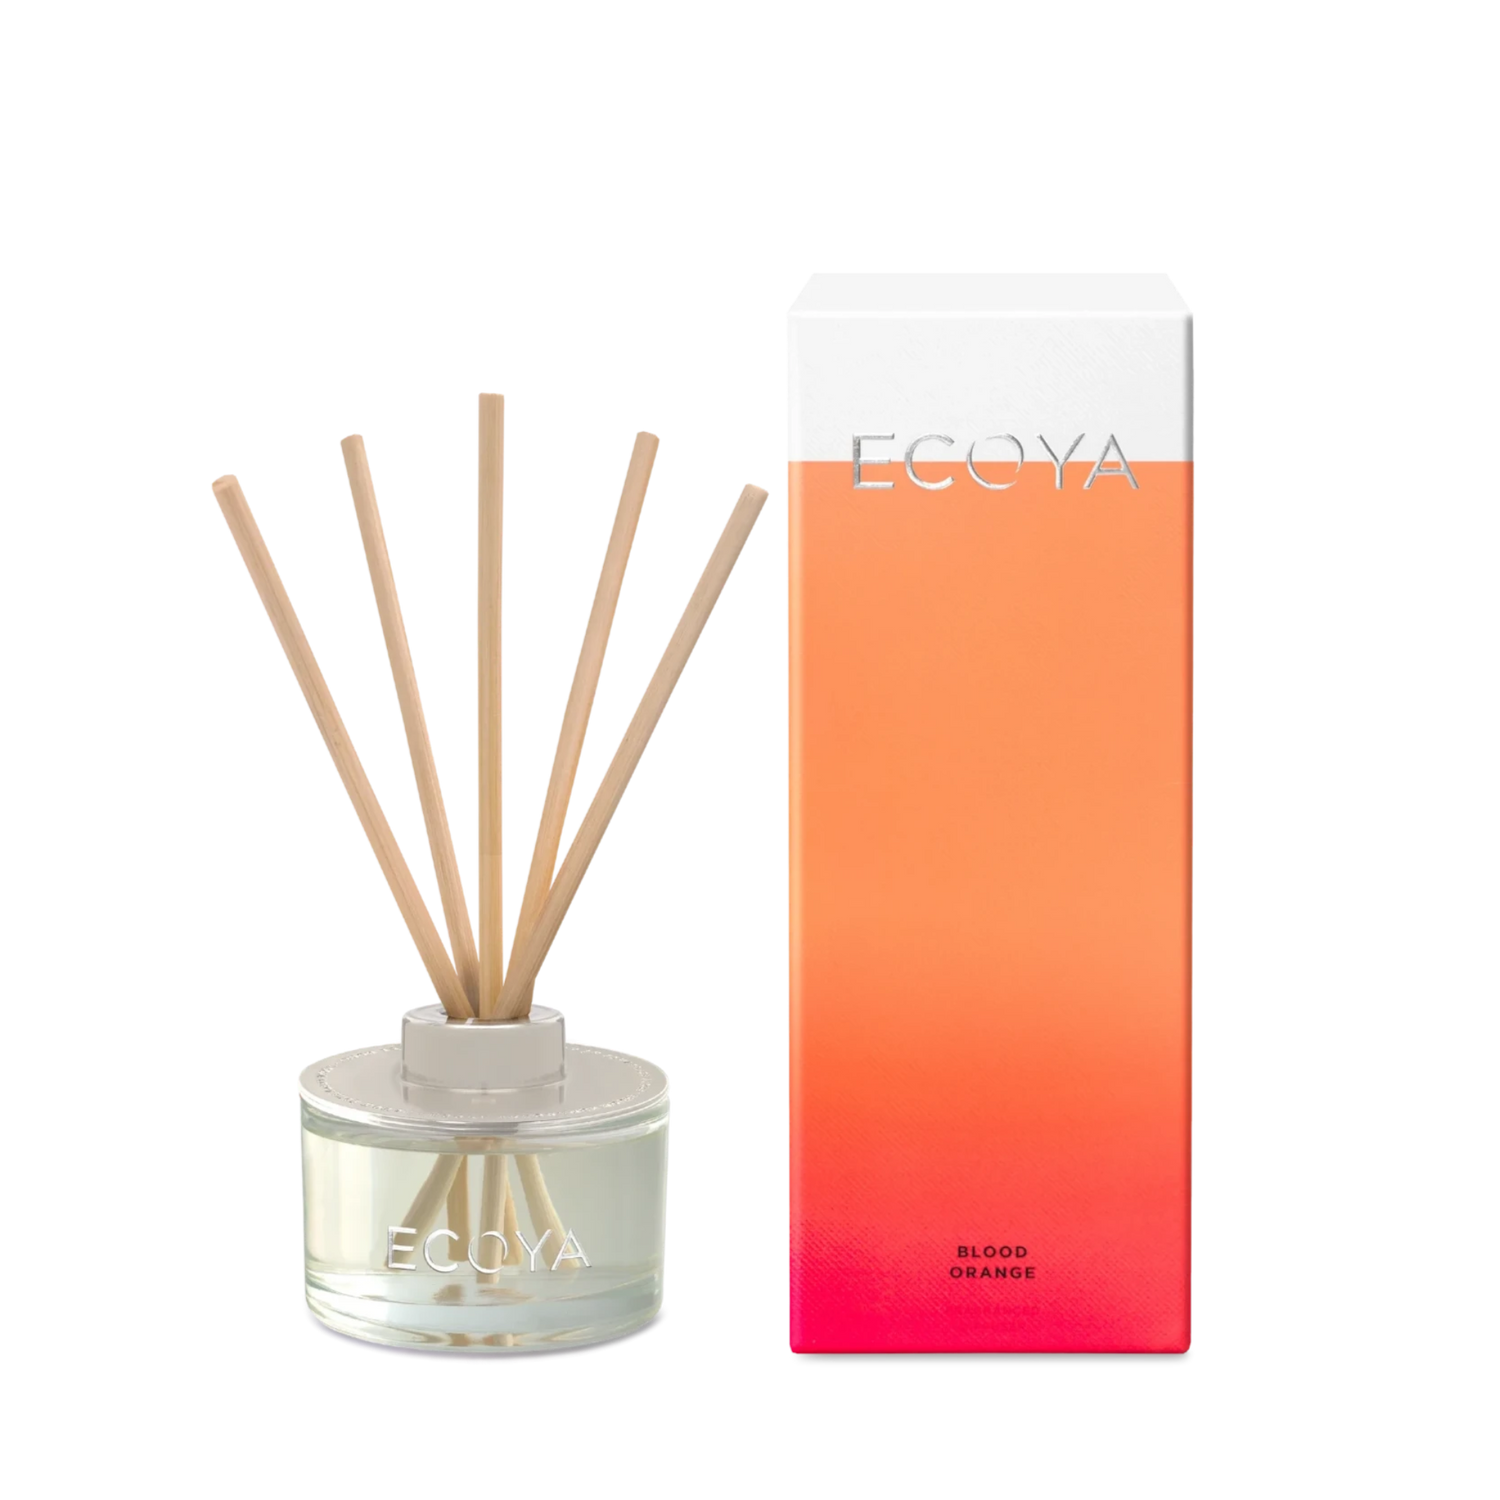 Mini diffuser ecoya fragrance